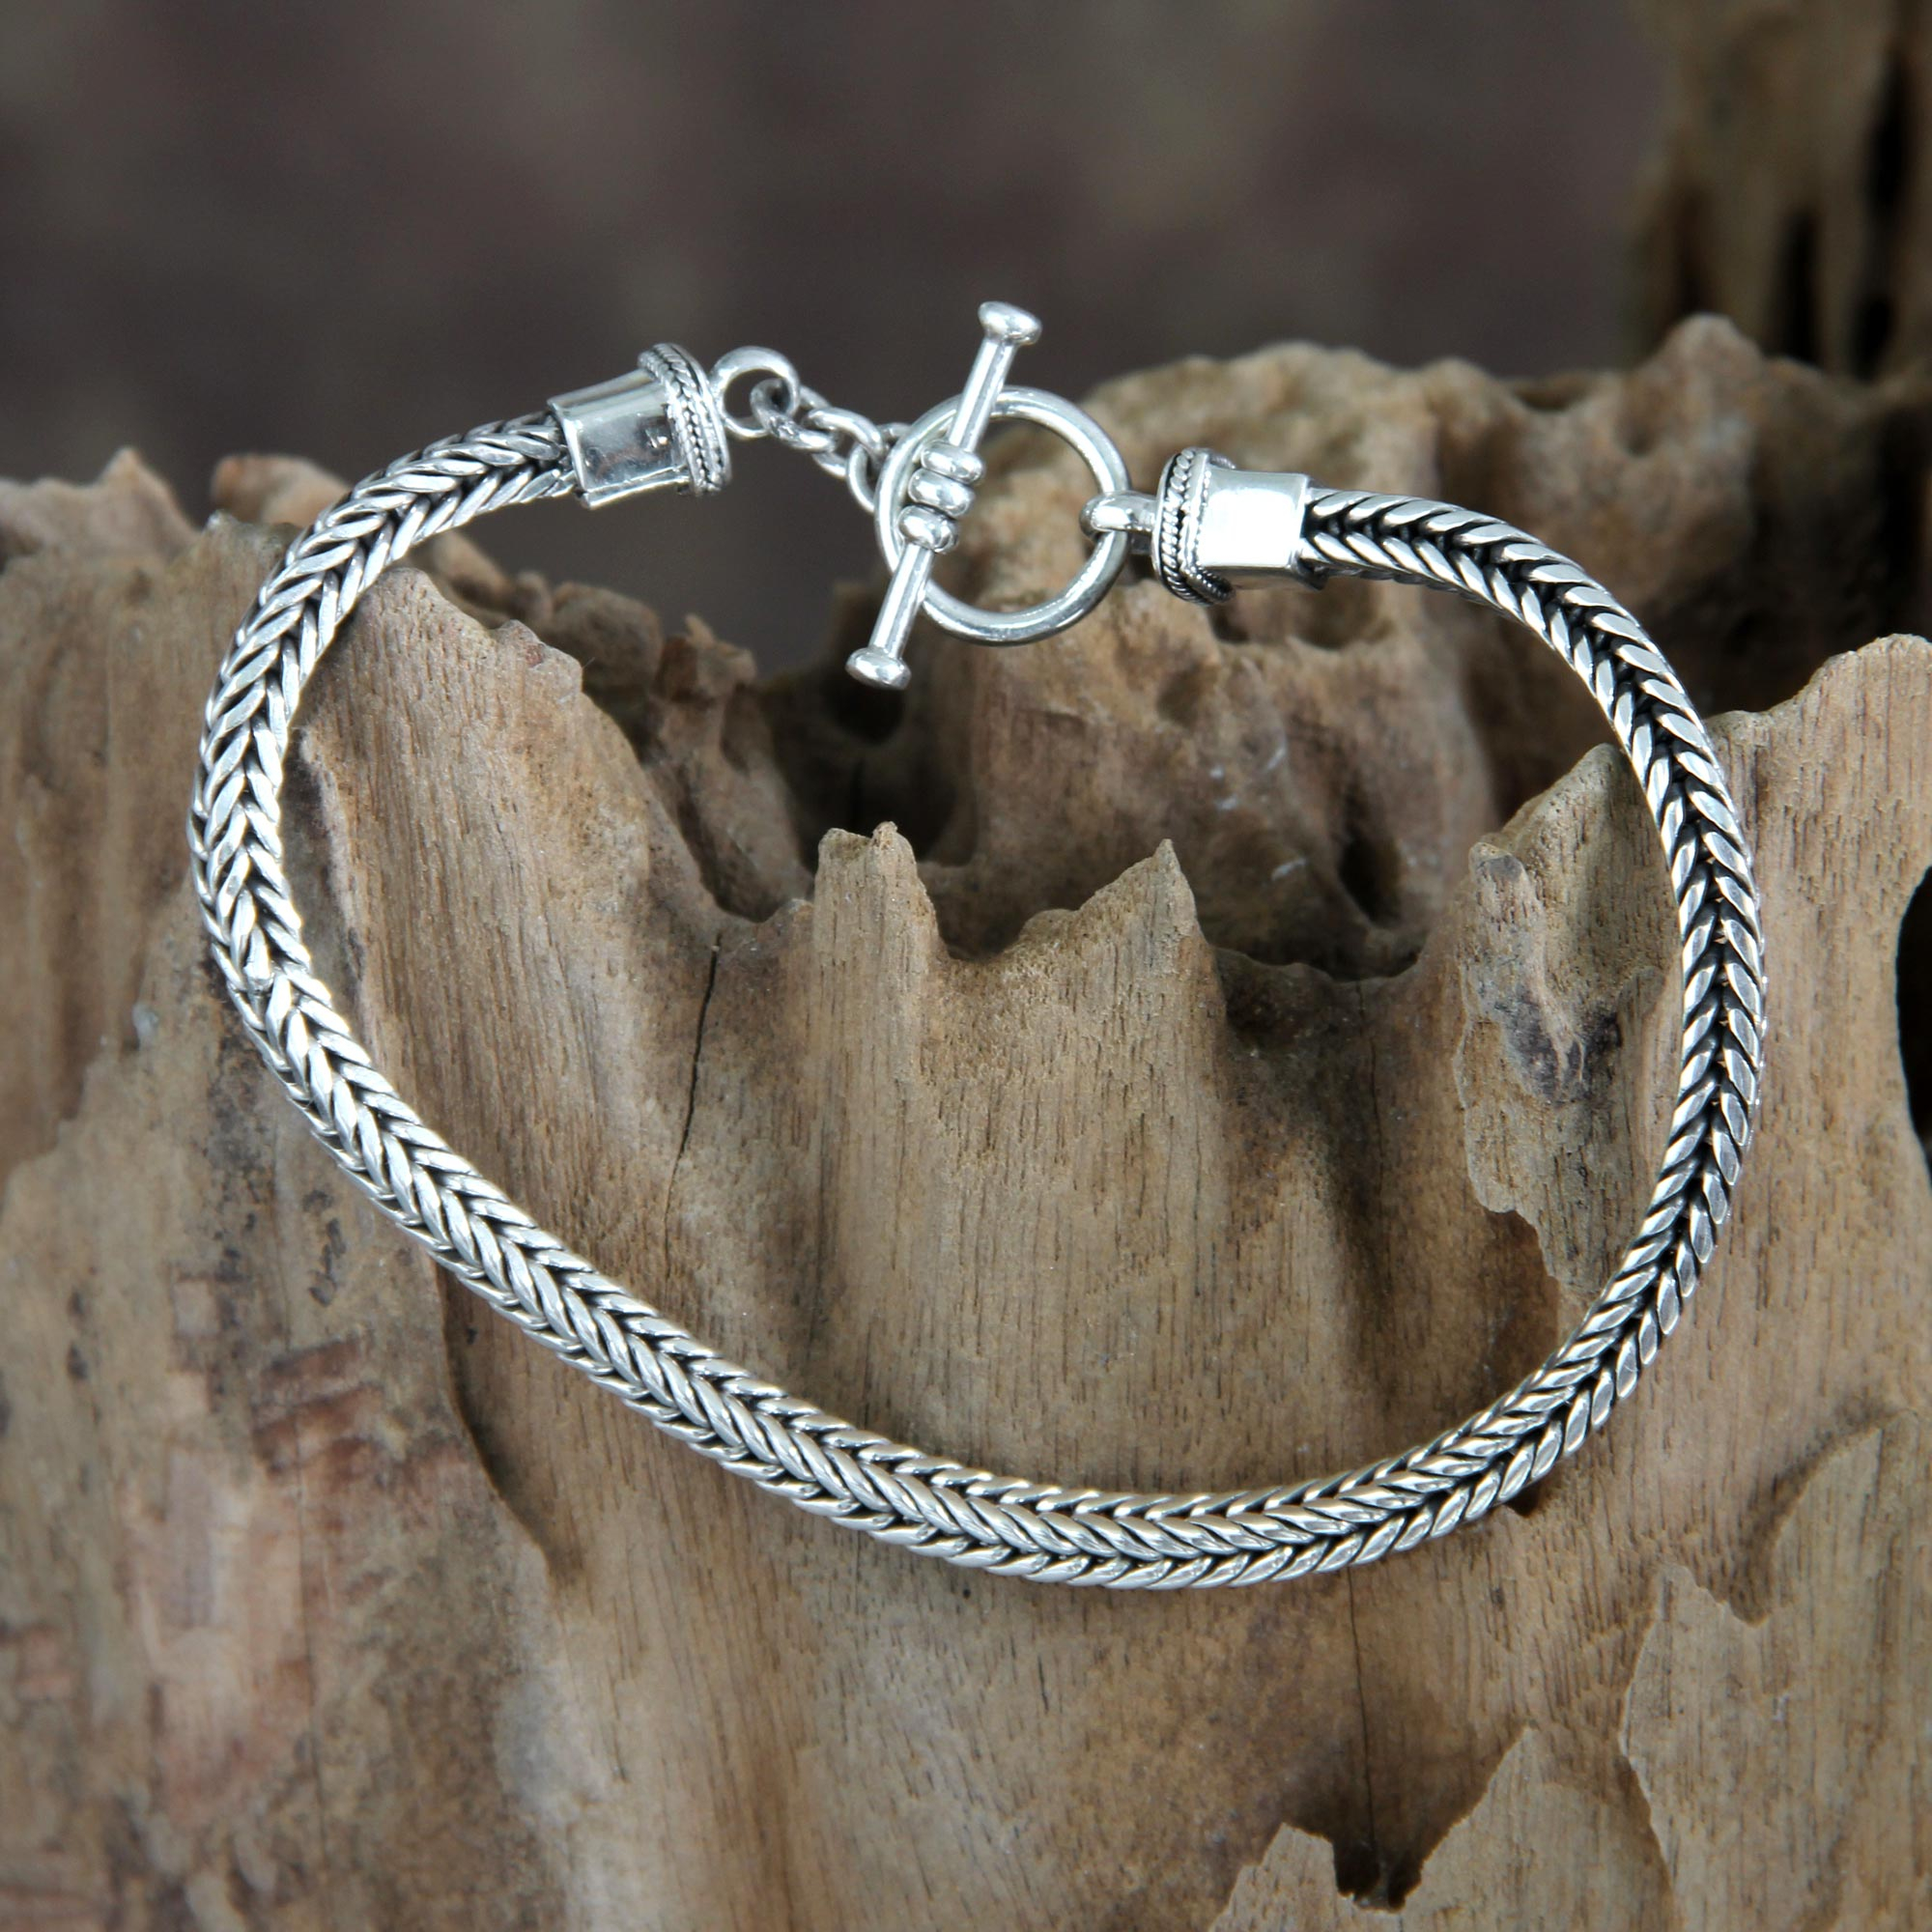 1 Piece Silver Bracelets Bali Silver Chain Bracelet  21 cm Long Braided Chain